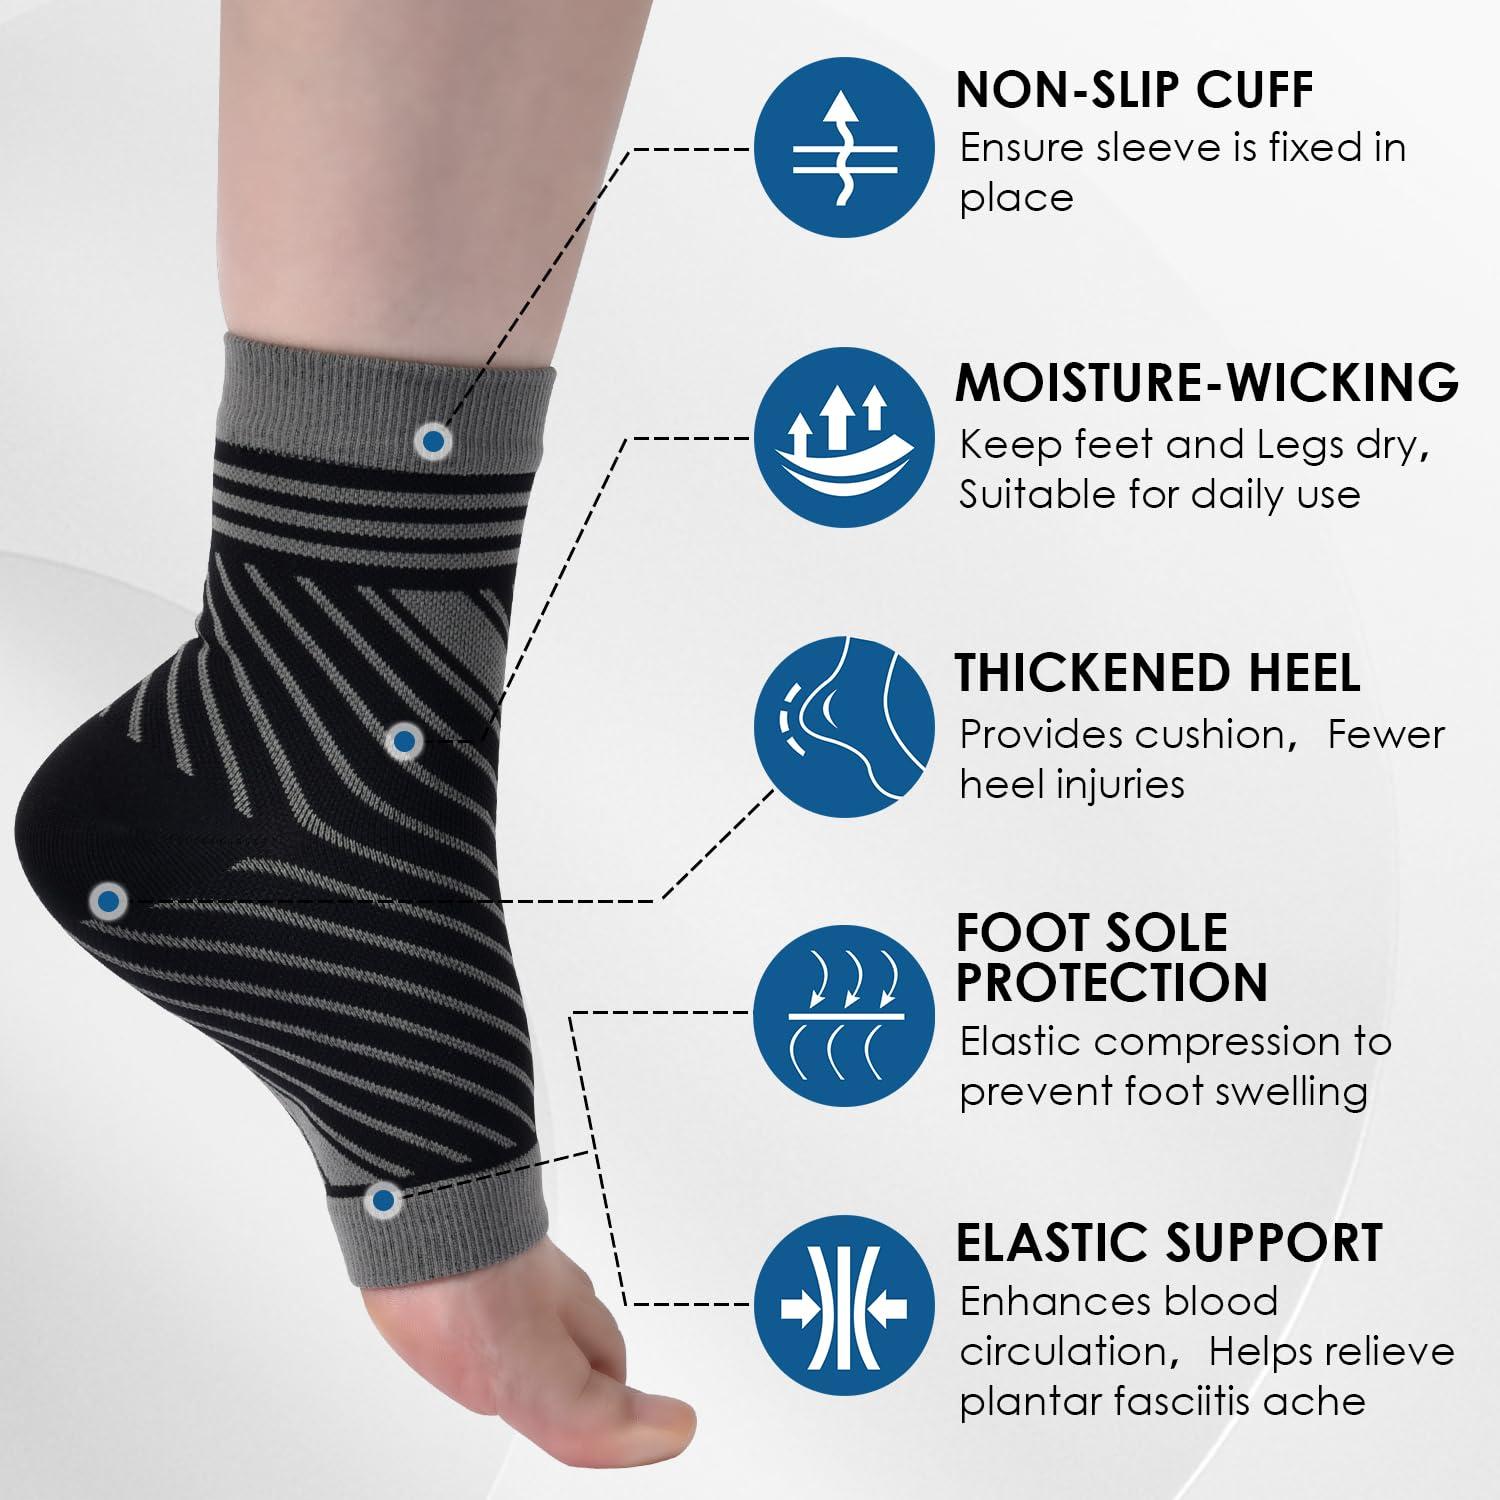 Do compression socks prevent sports injuries?